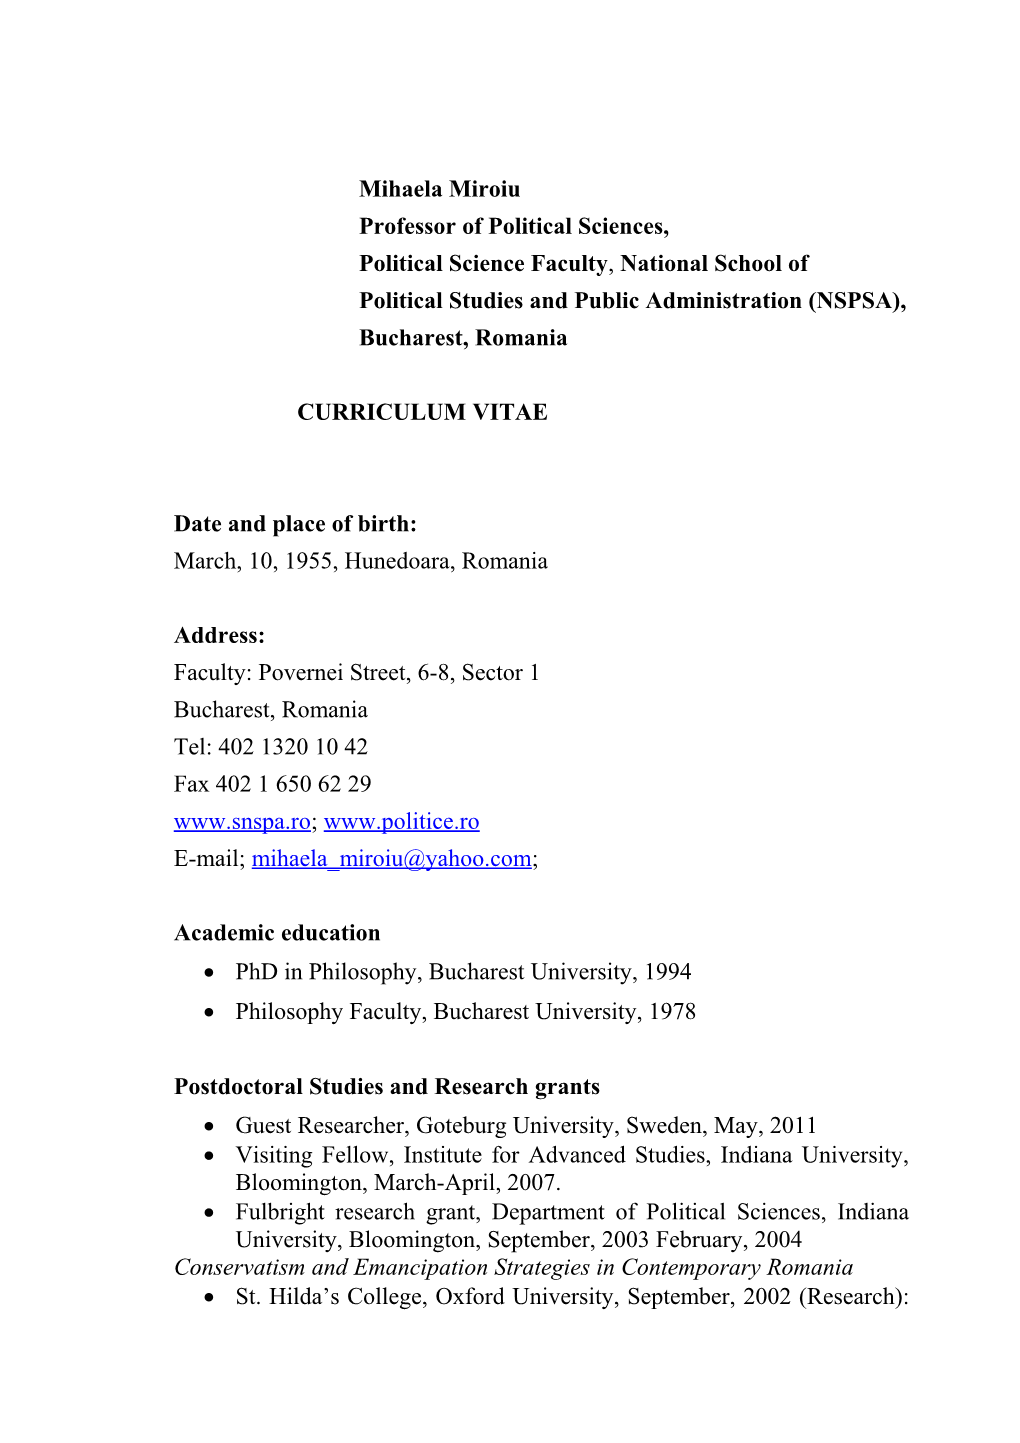 Political Studies and Public Administration (NSPSA)